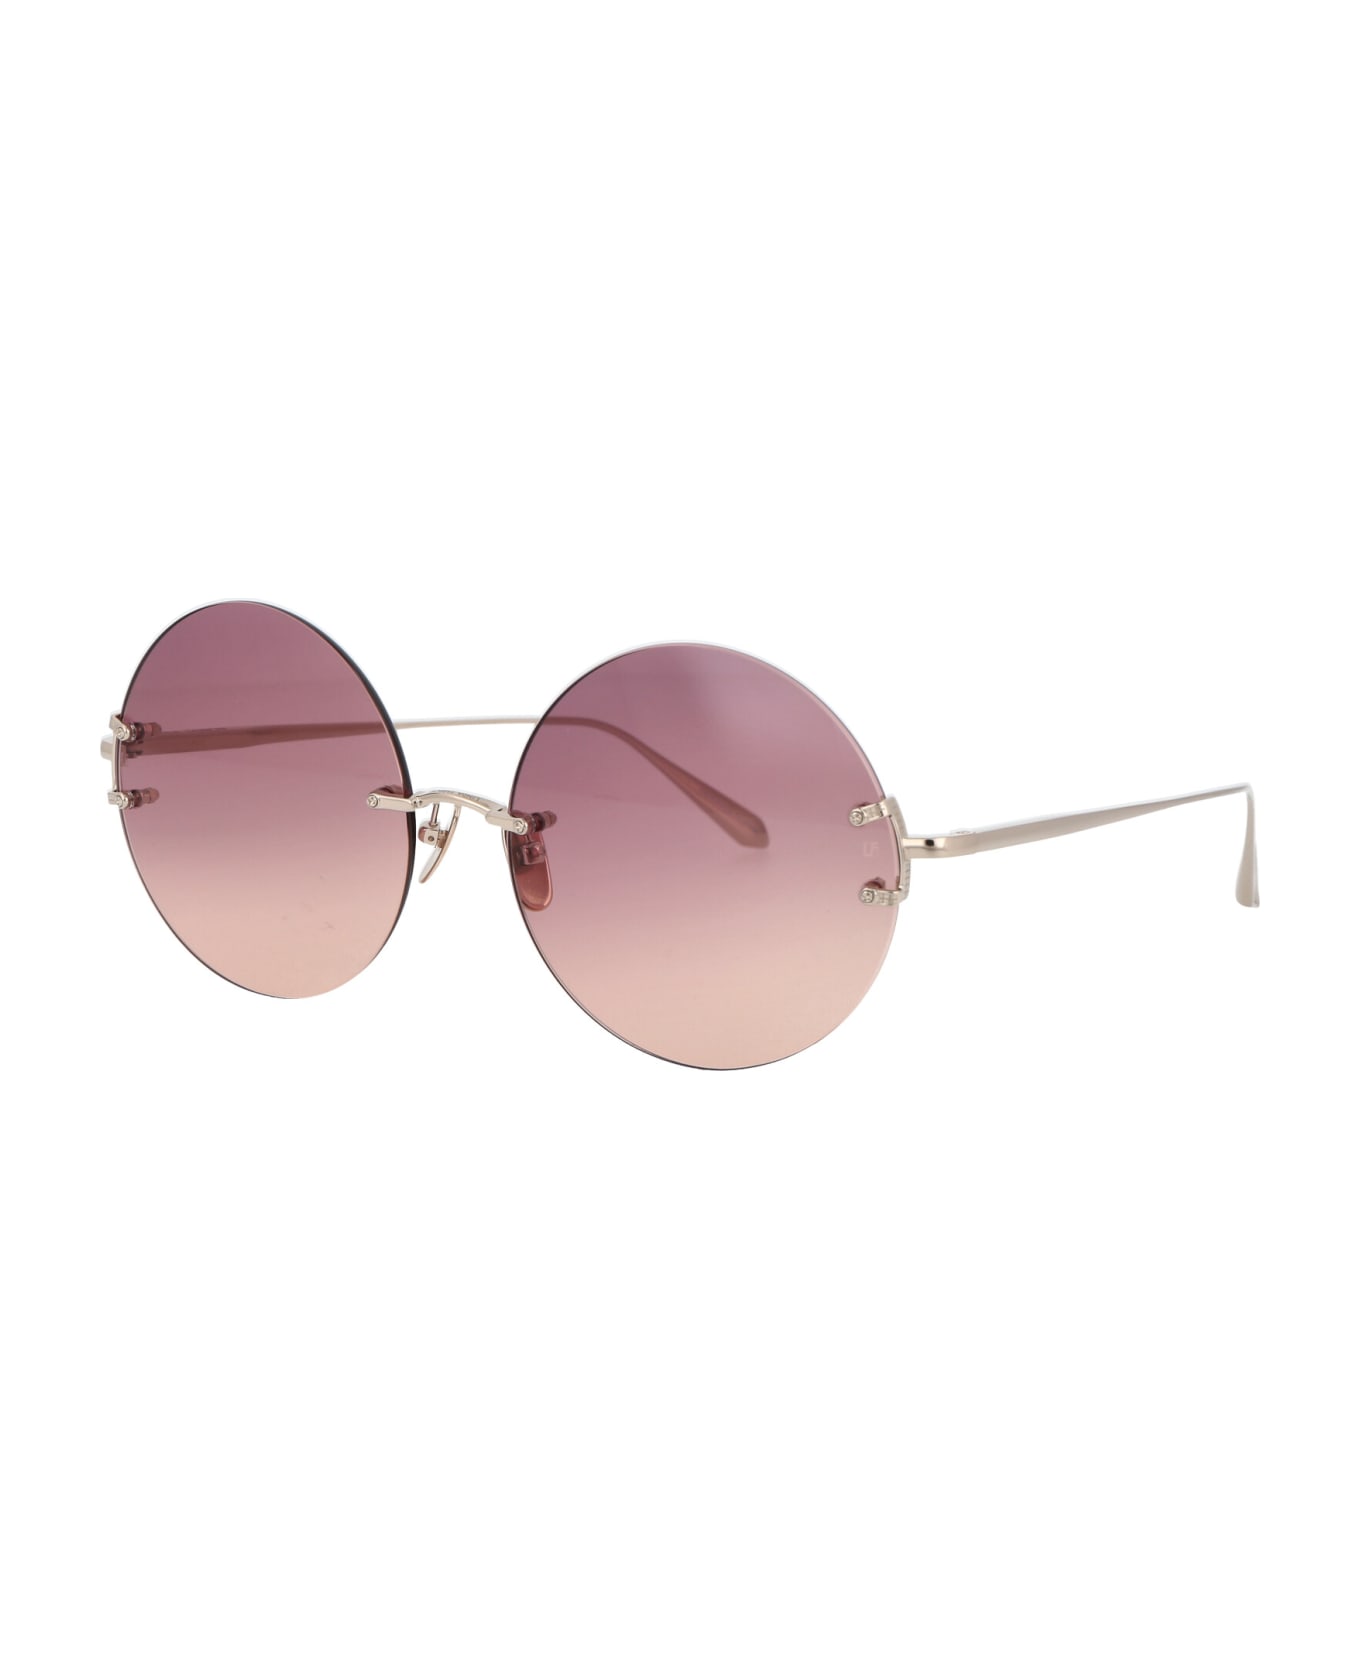 Linda Farrow Lotus Sunglasses - LIGHTGOLD/WINEGRAD